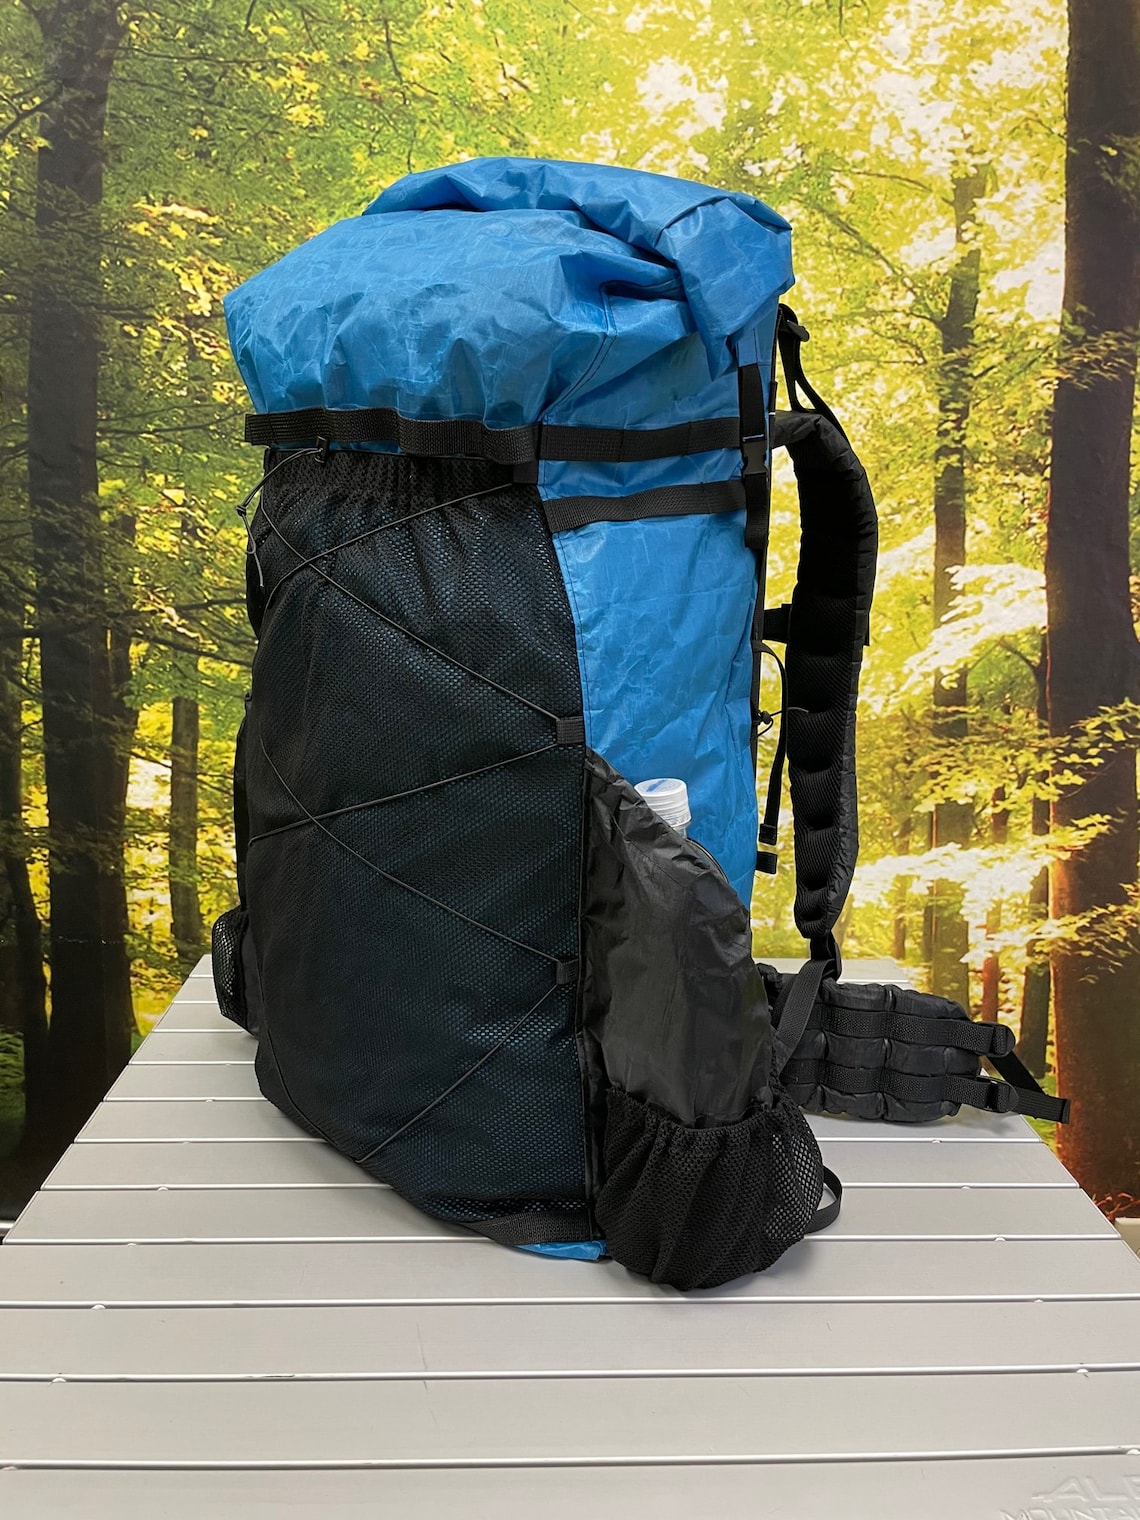 PBD TRAILPACK60 External Frame Hiking Ultralight Backpack - Etsy